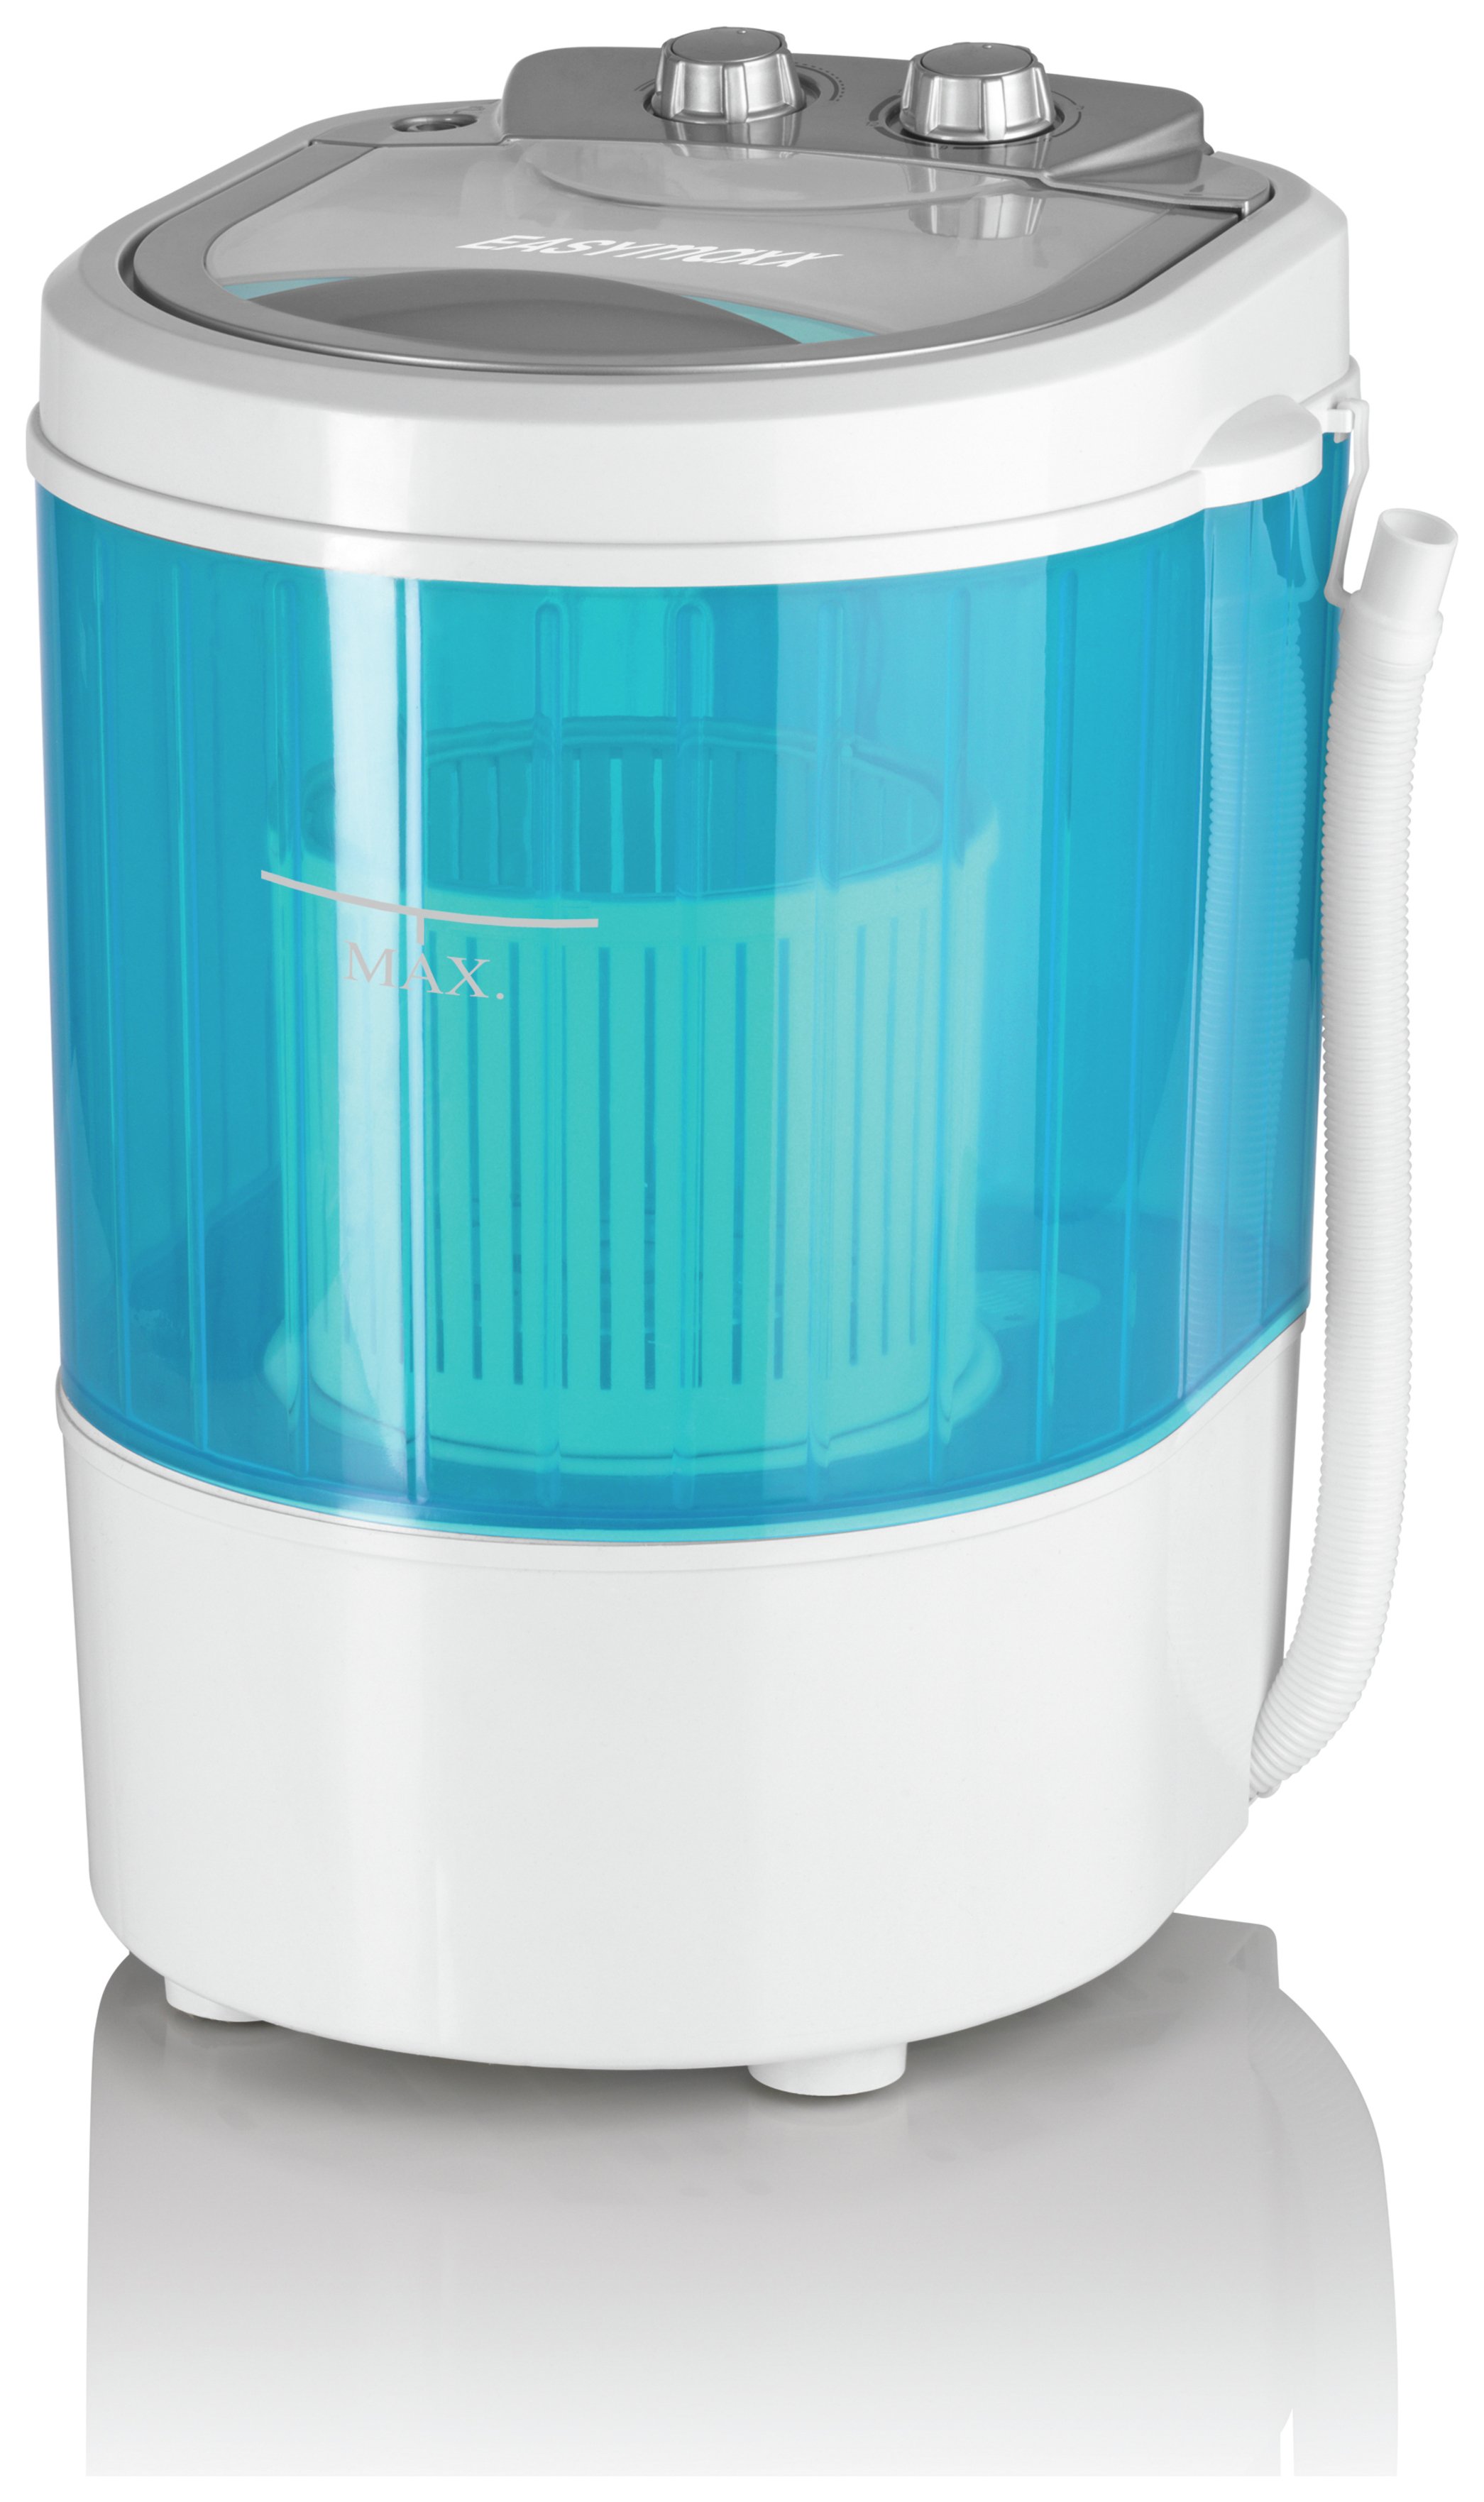 EASYmaxx 3KG 260W Mini Washing Machine - White & Blue